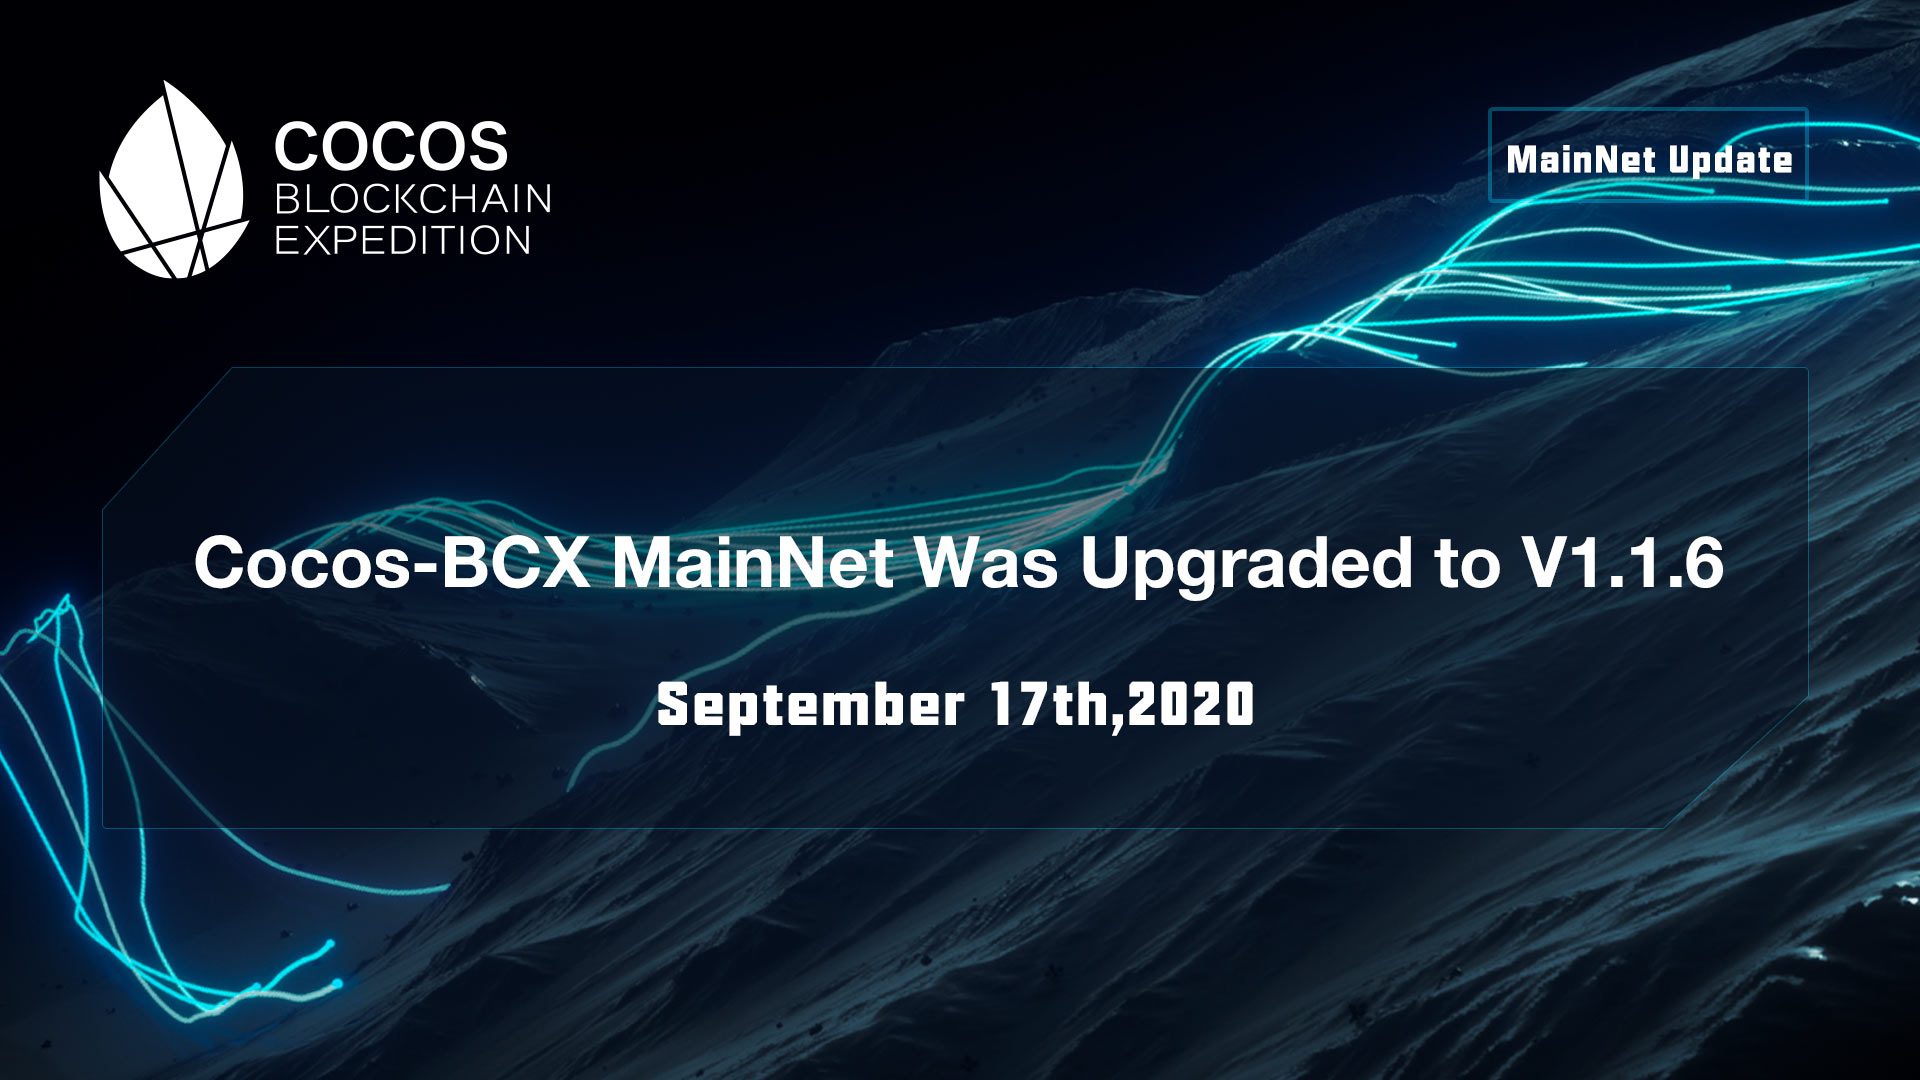 [Duyuru] Cocos-BCX MainNet, V1.1.6’ya Yükseltildi